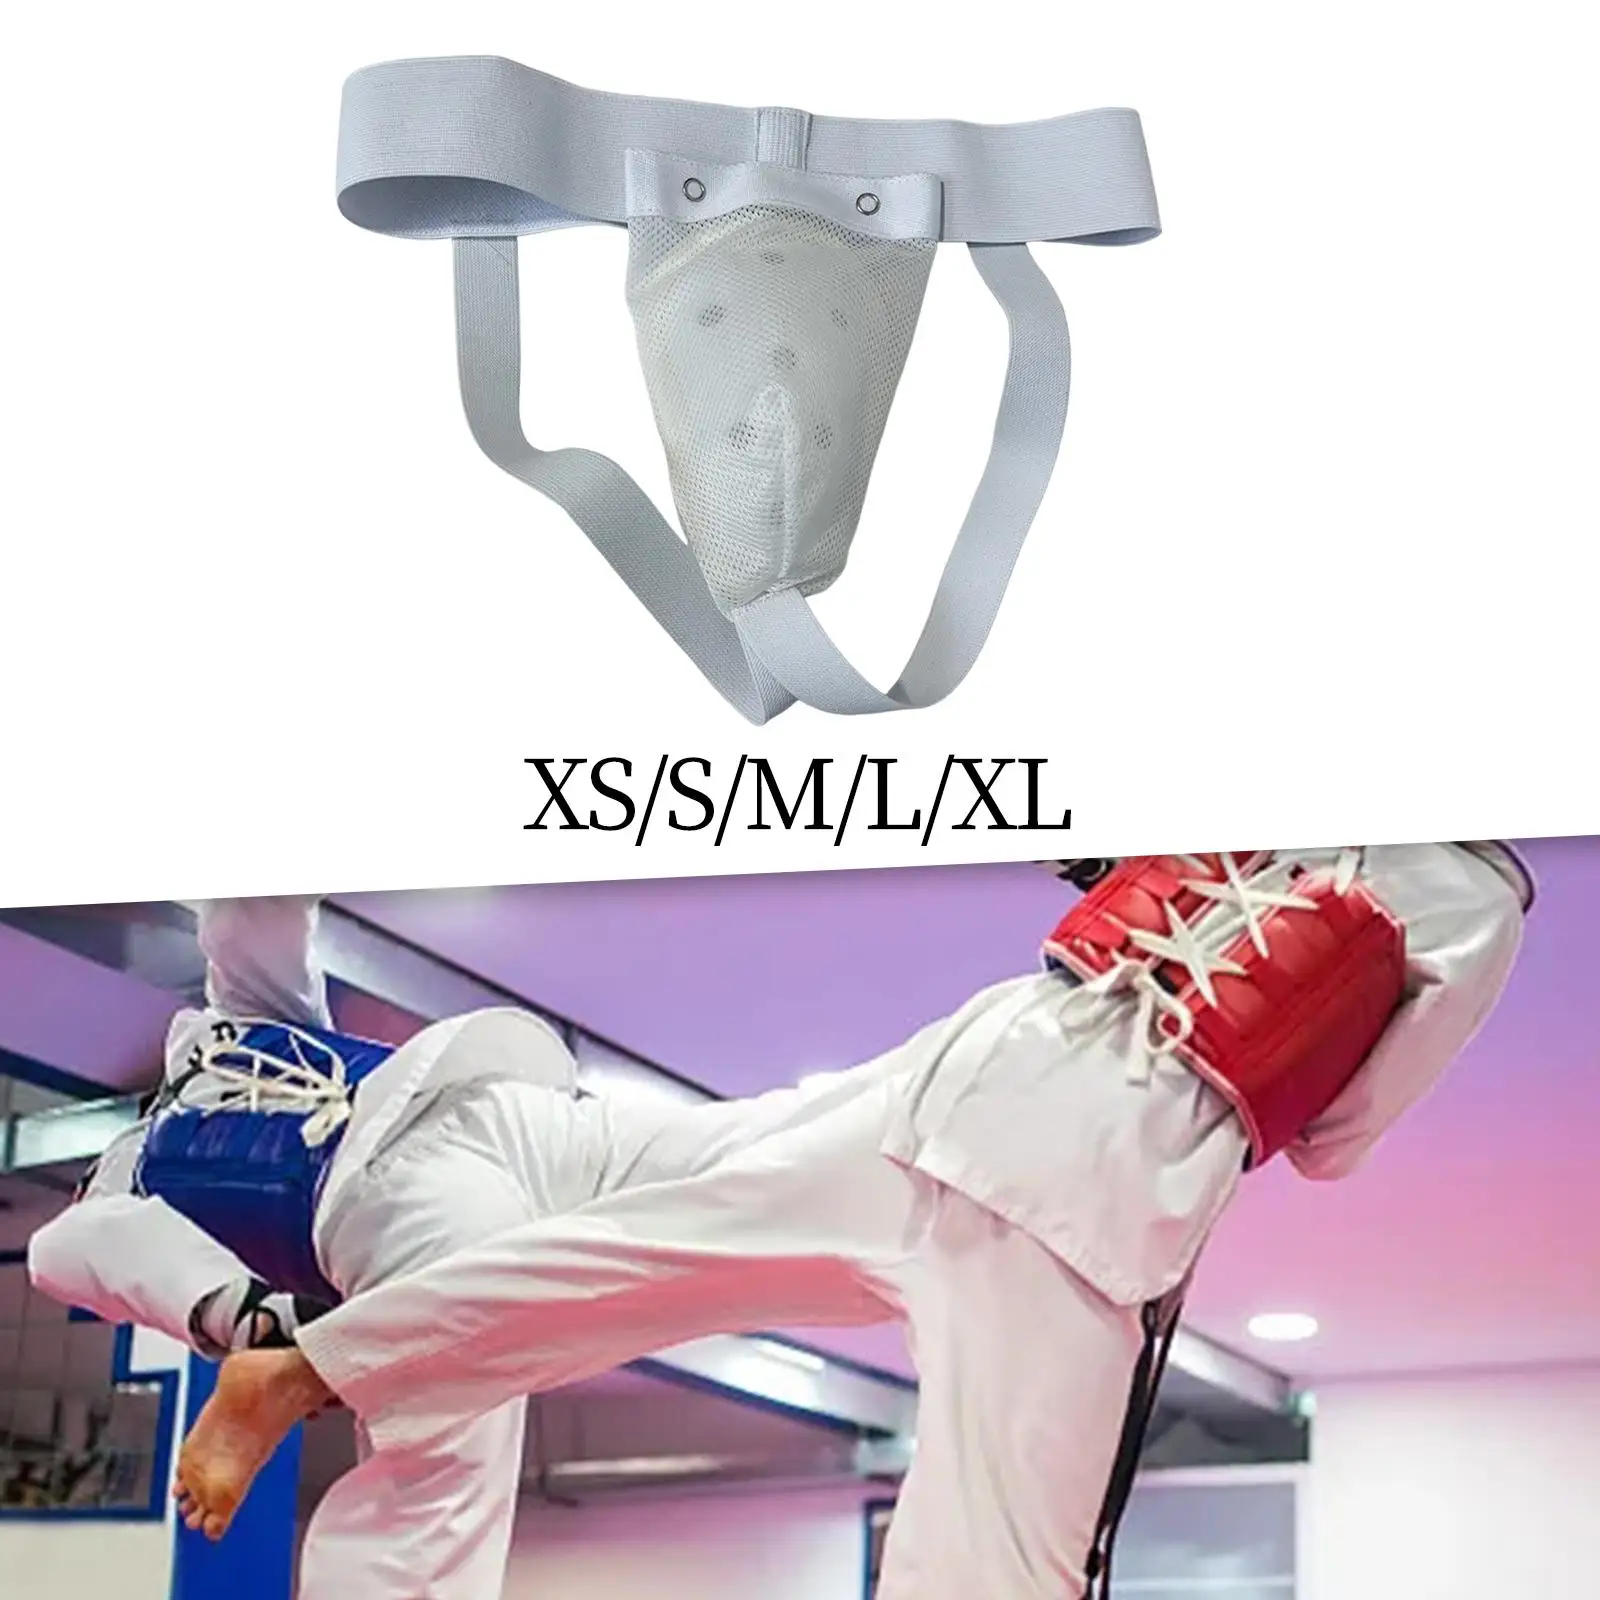 Groin Protector Cup Muay Thai Adjustable Protection Taekwondo Groin Guard